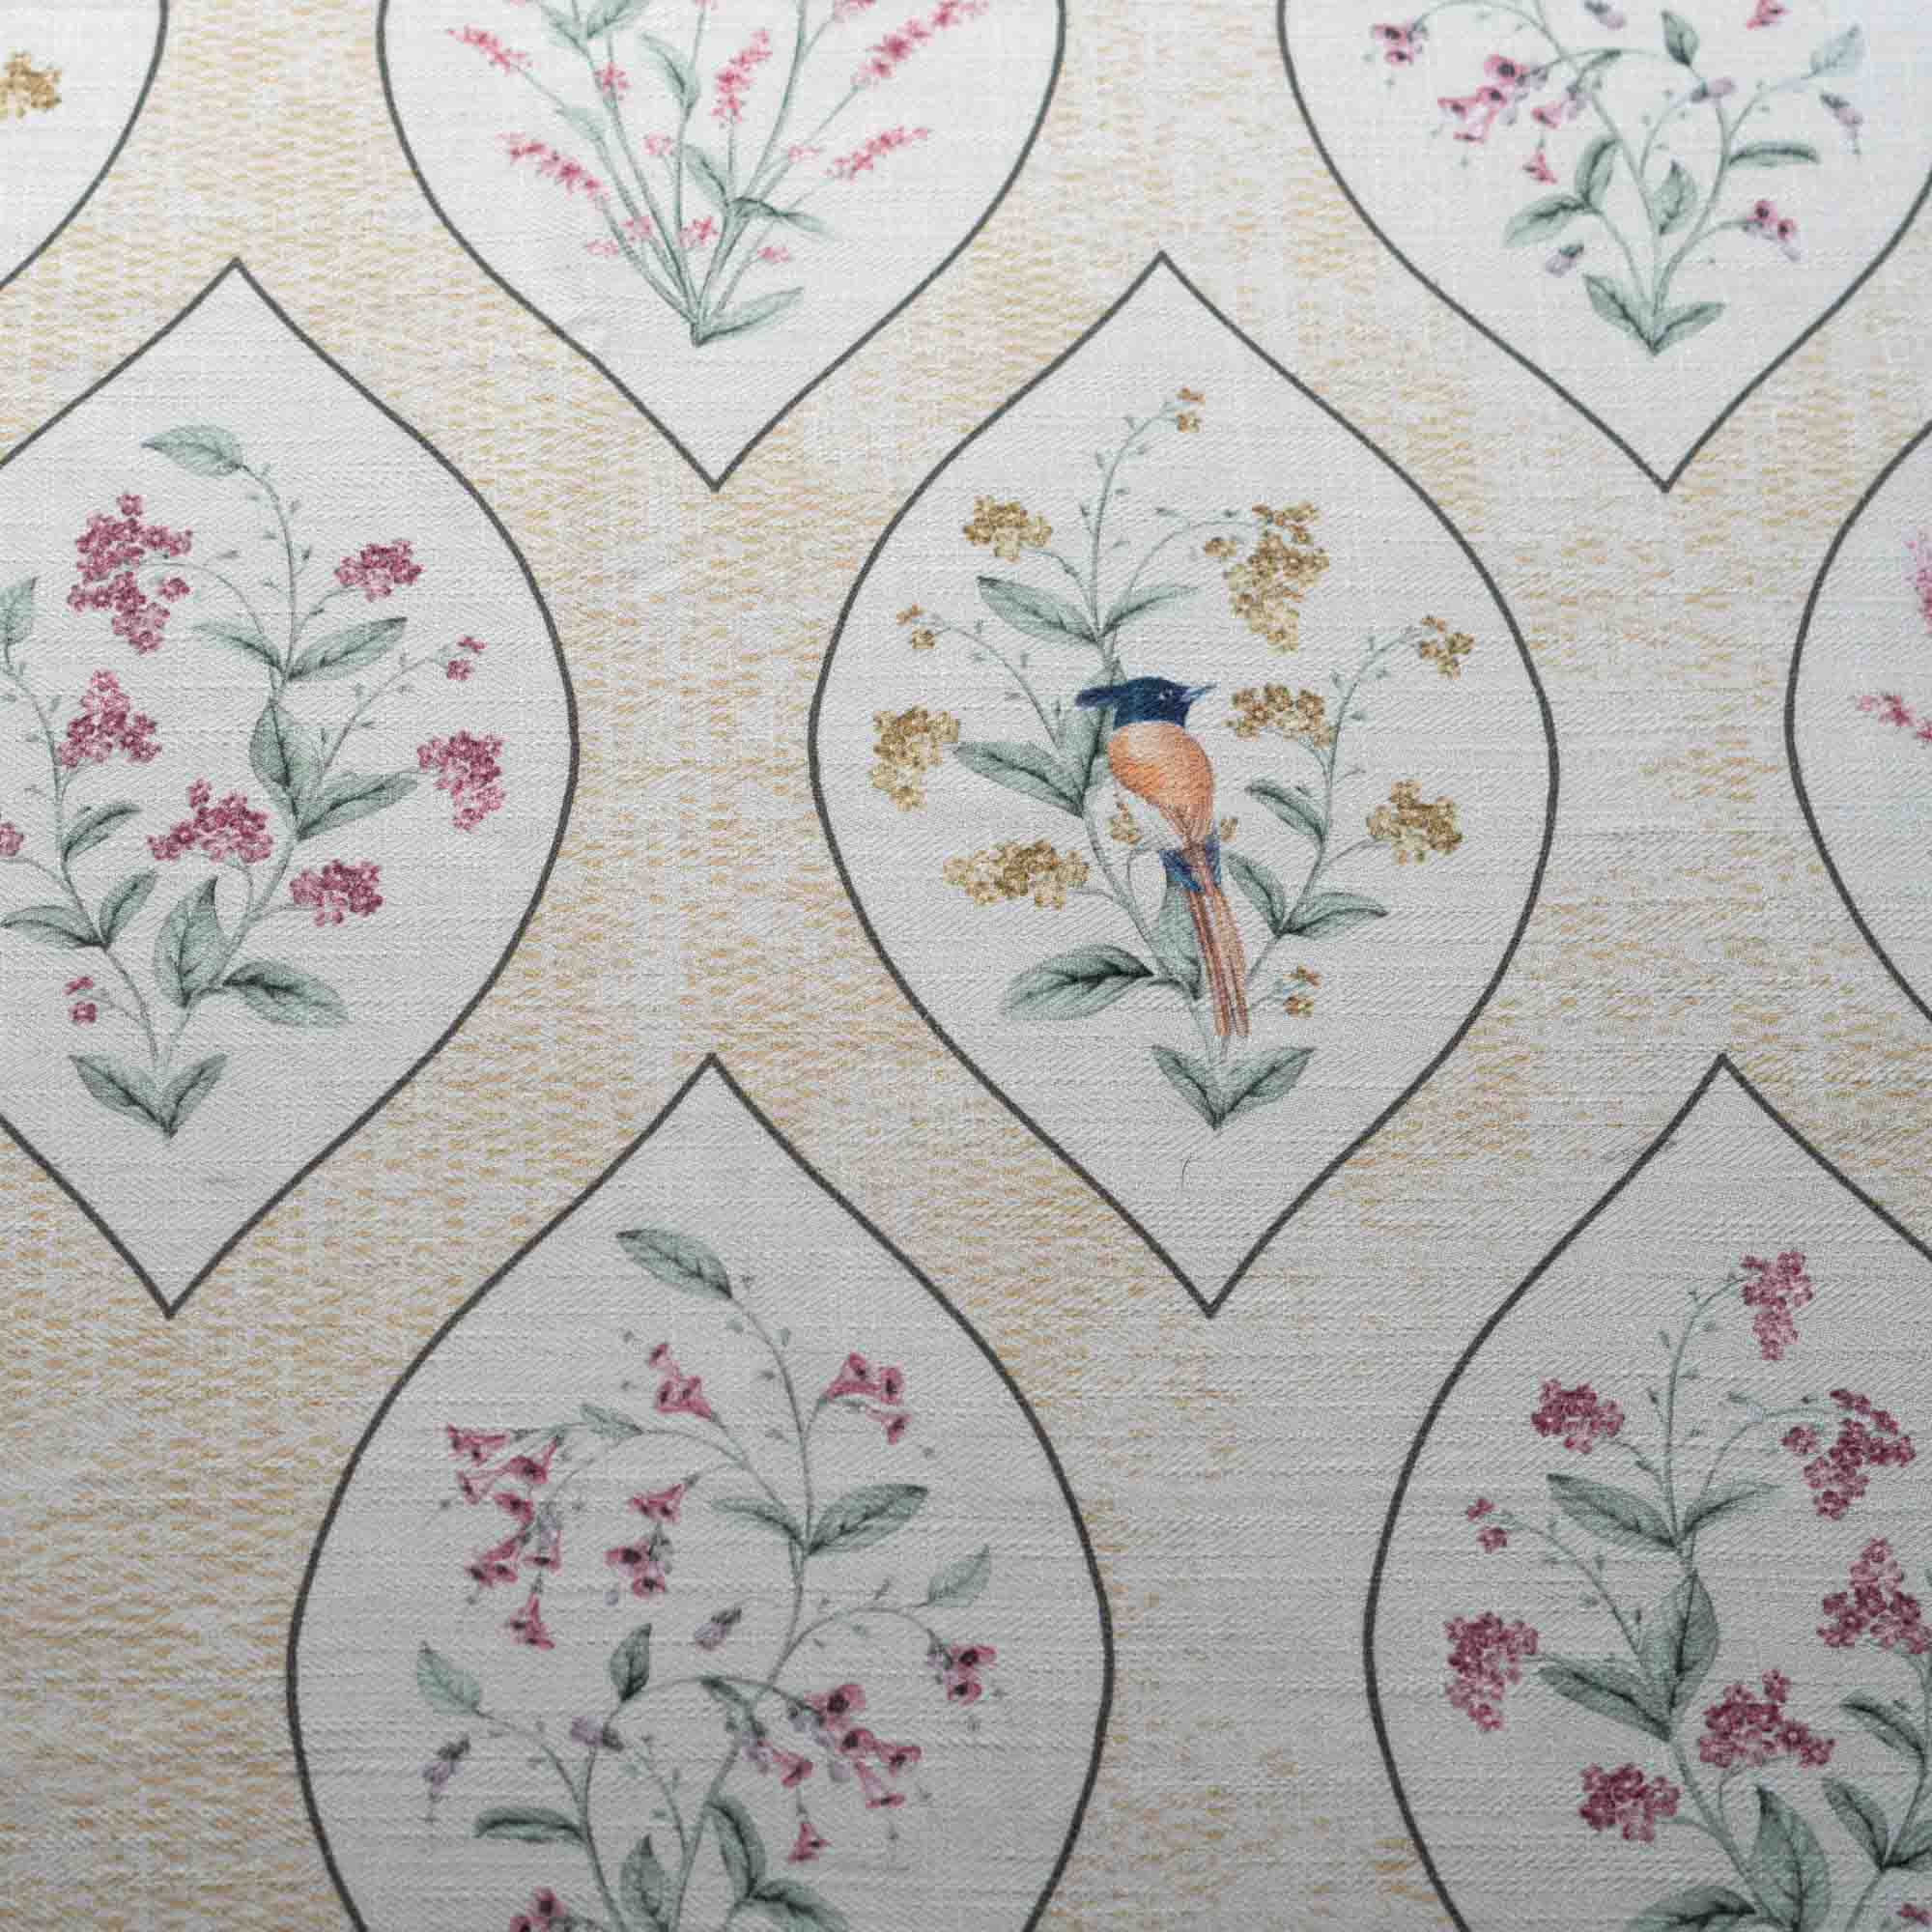 A Persian Corridor Spring Cotton Linen Blend Fabric (Horizontal Repeat)